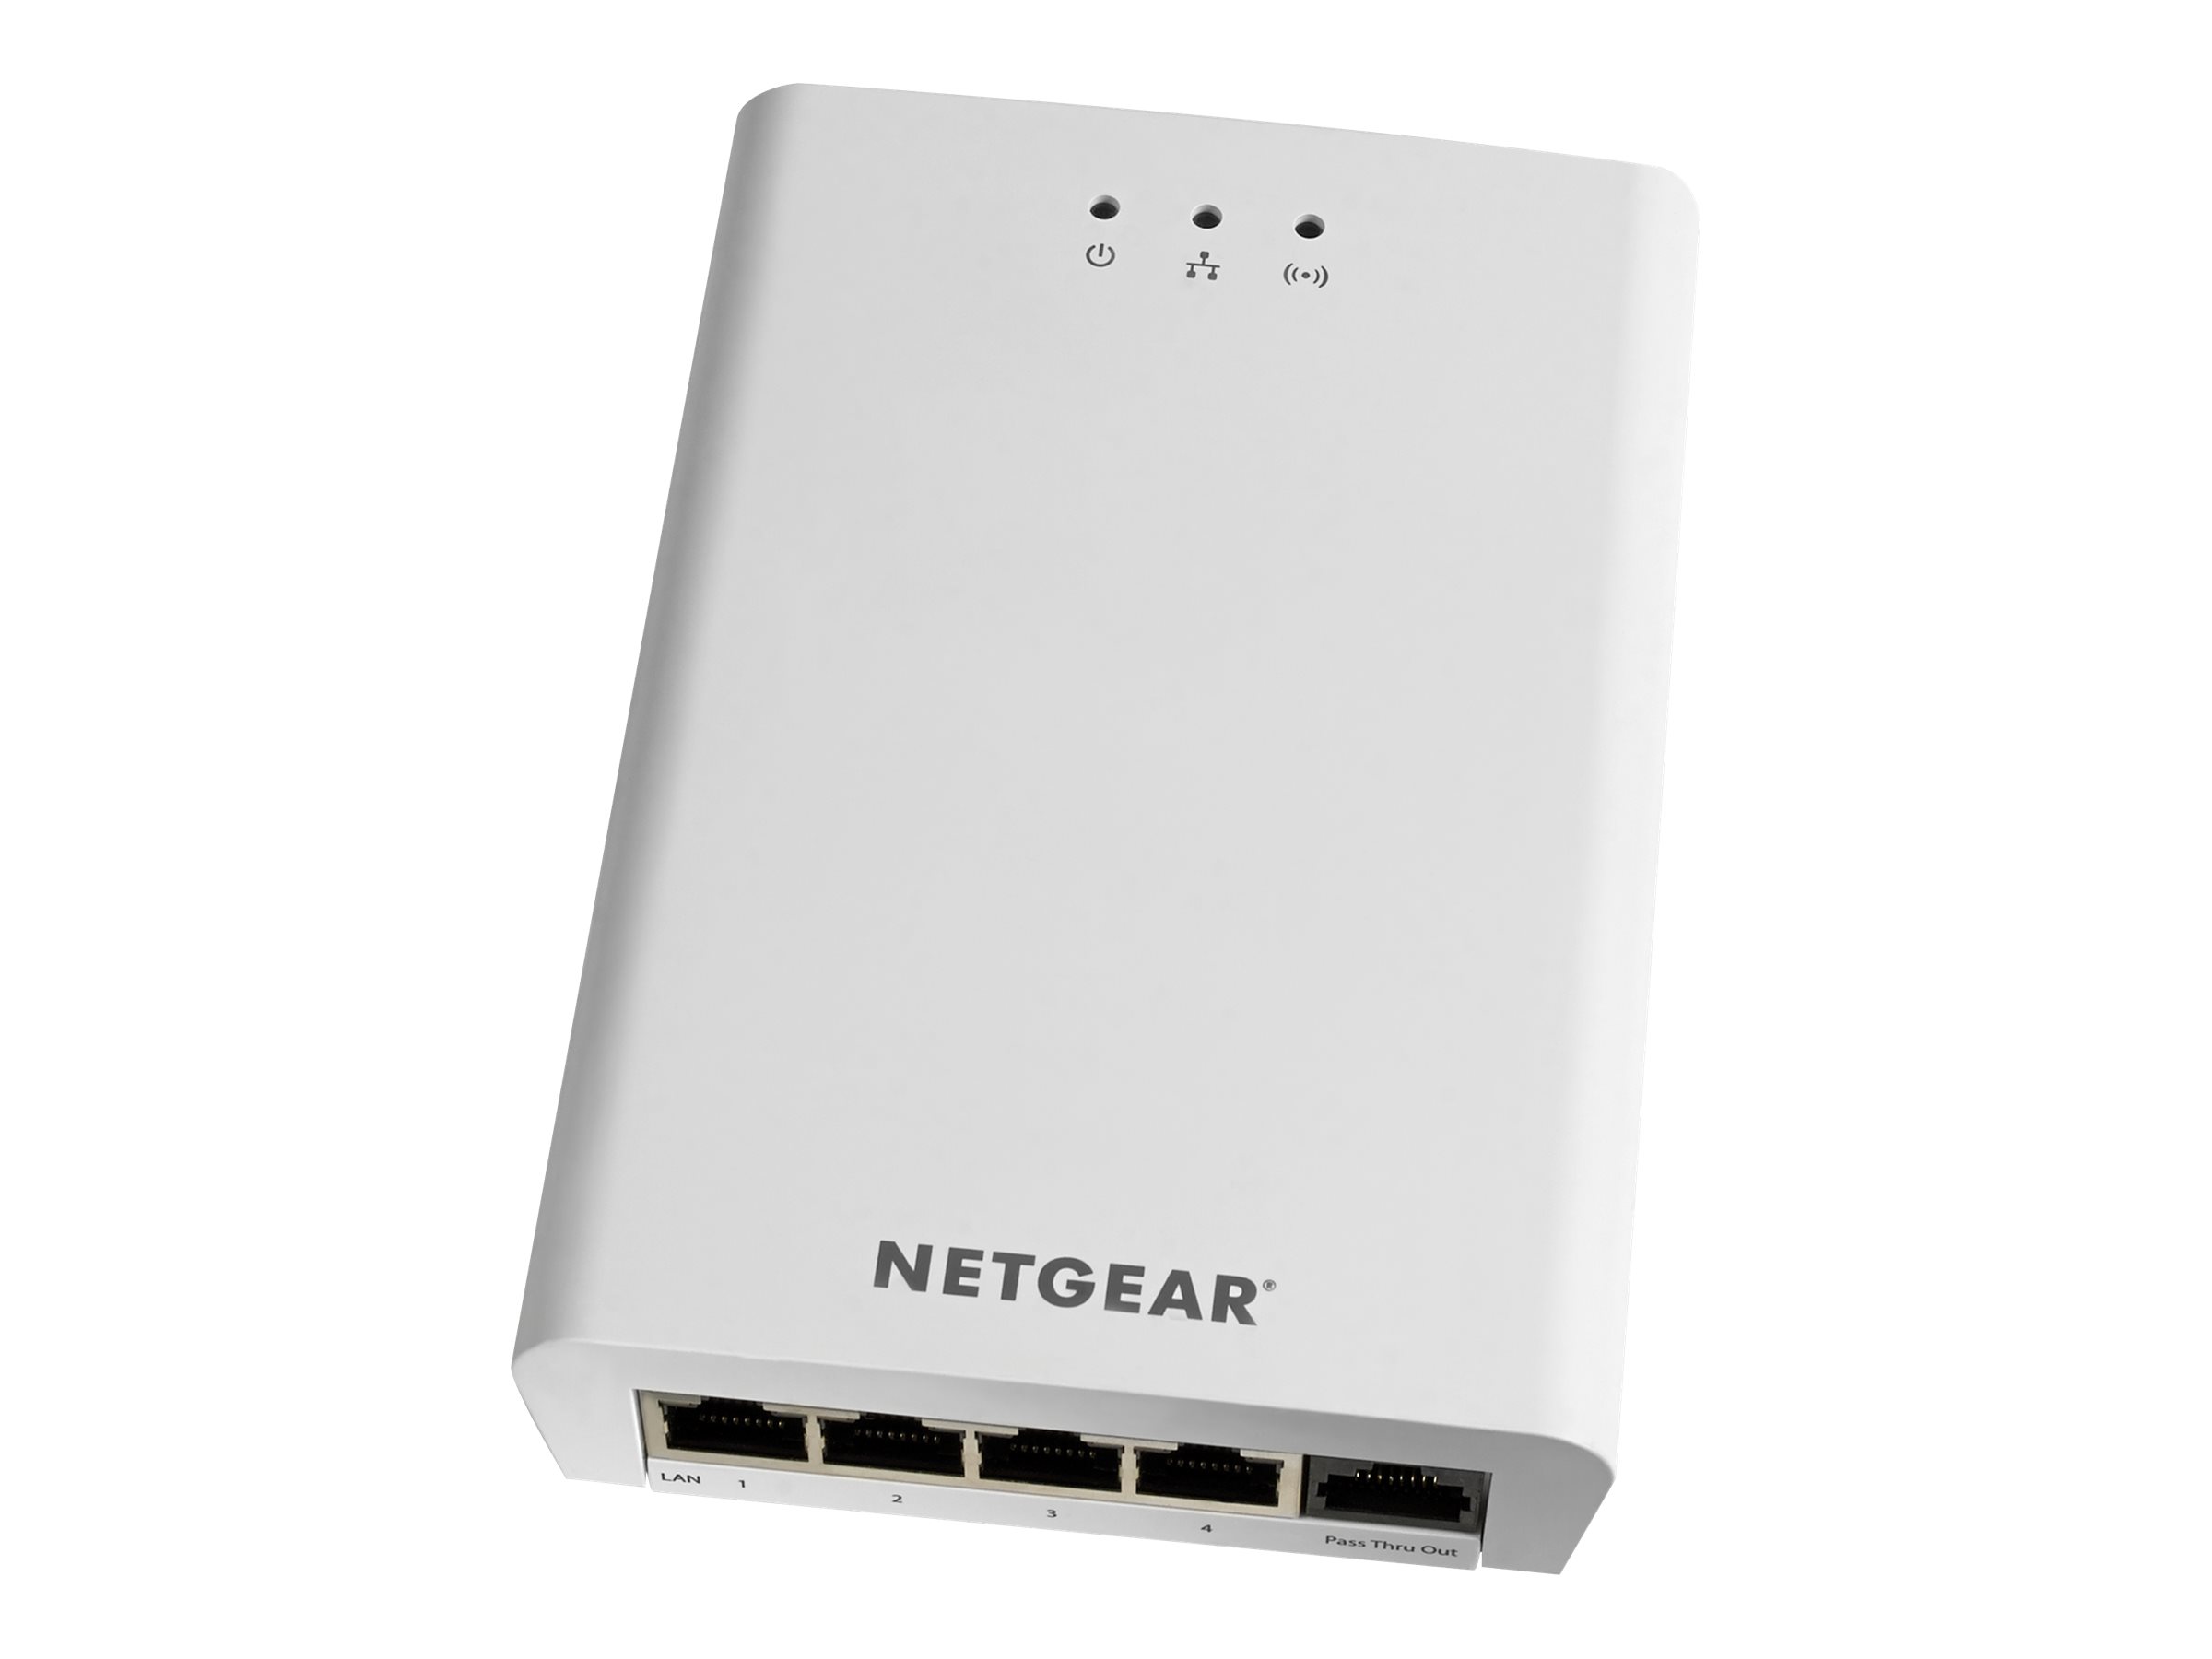 NETGEAR ProSafe WN370 - wireless access point - image 2 of 2